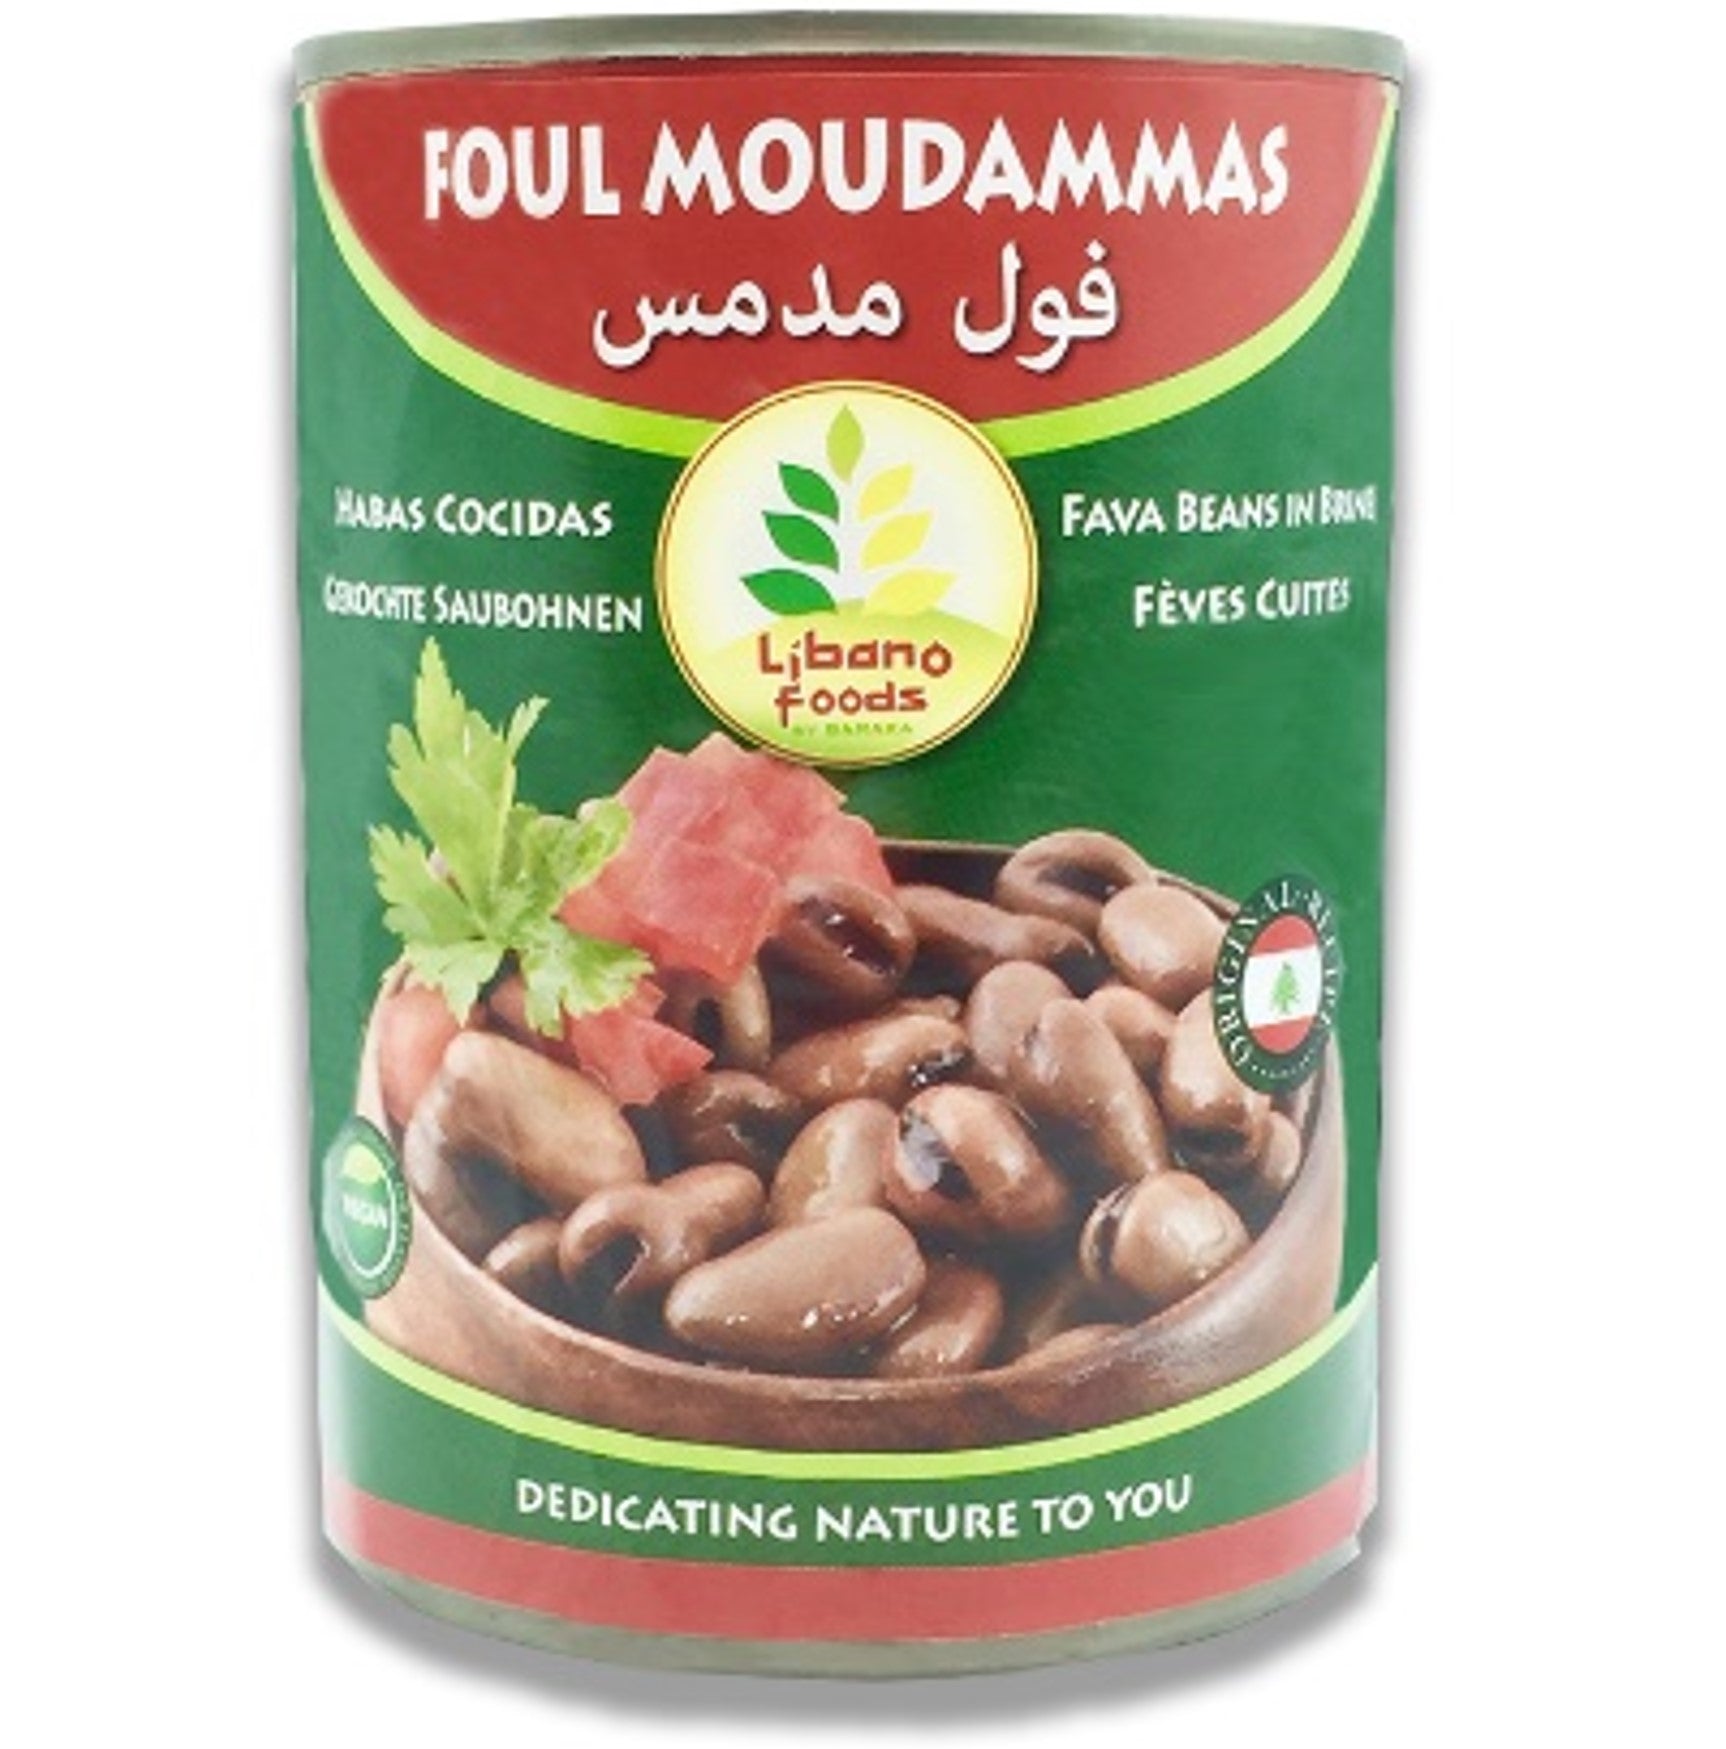 Foul Moudammas, Libanofoods, 400 gr